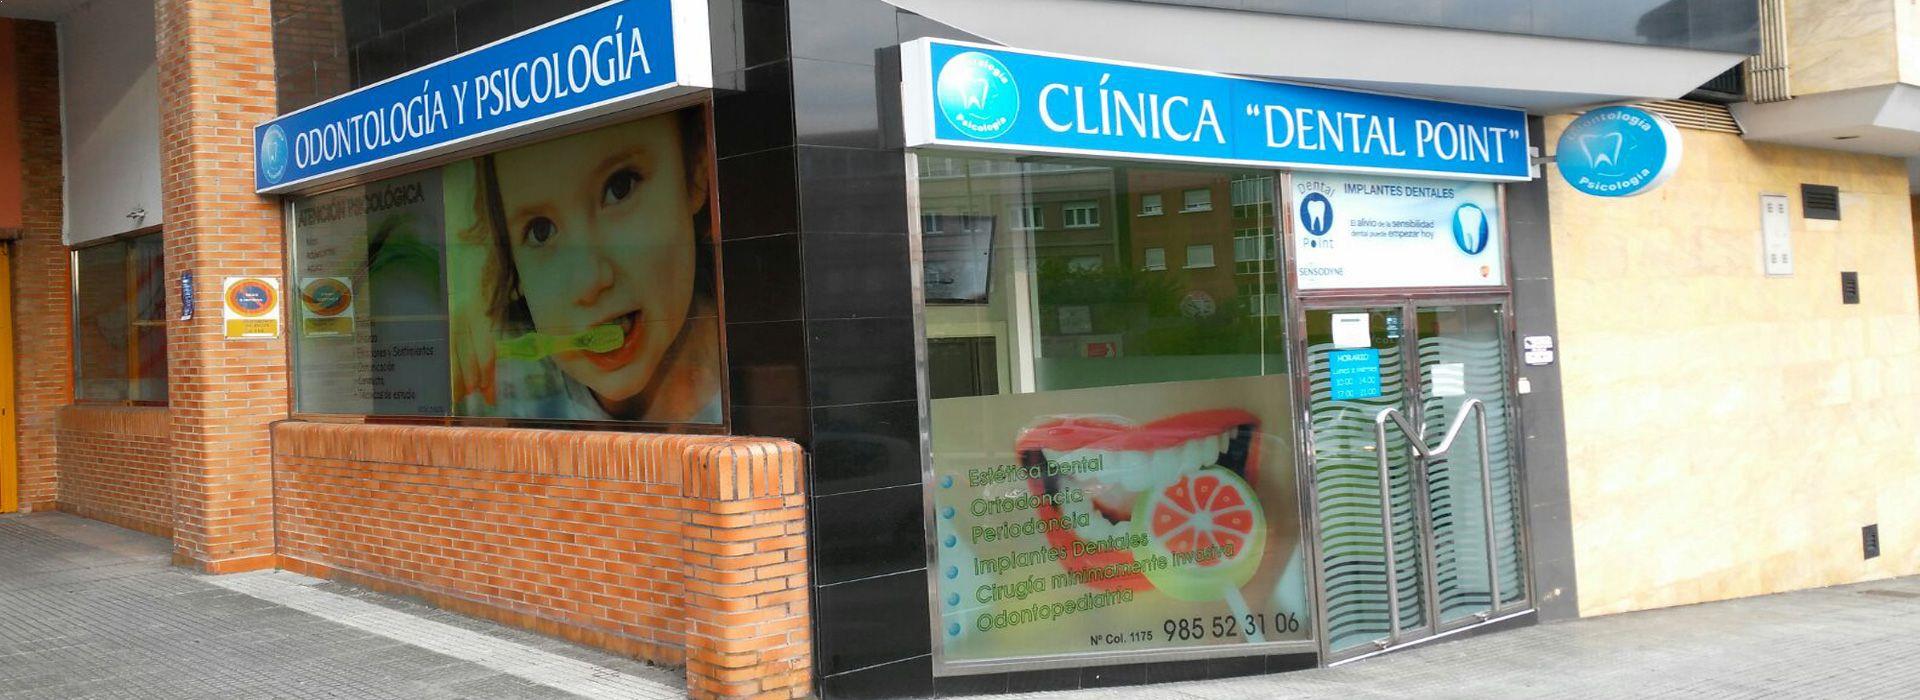 Dentista Asturias, clinica dental point aviles, estetica dental